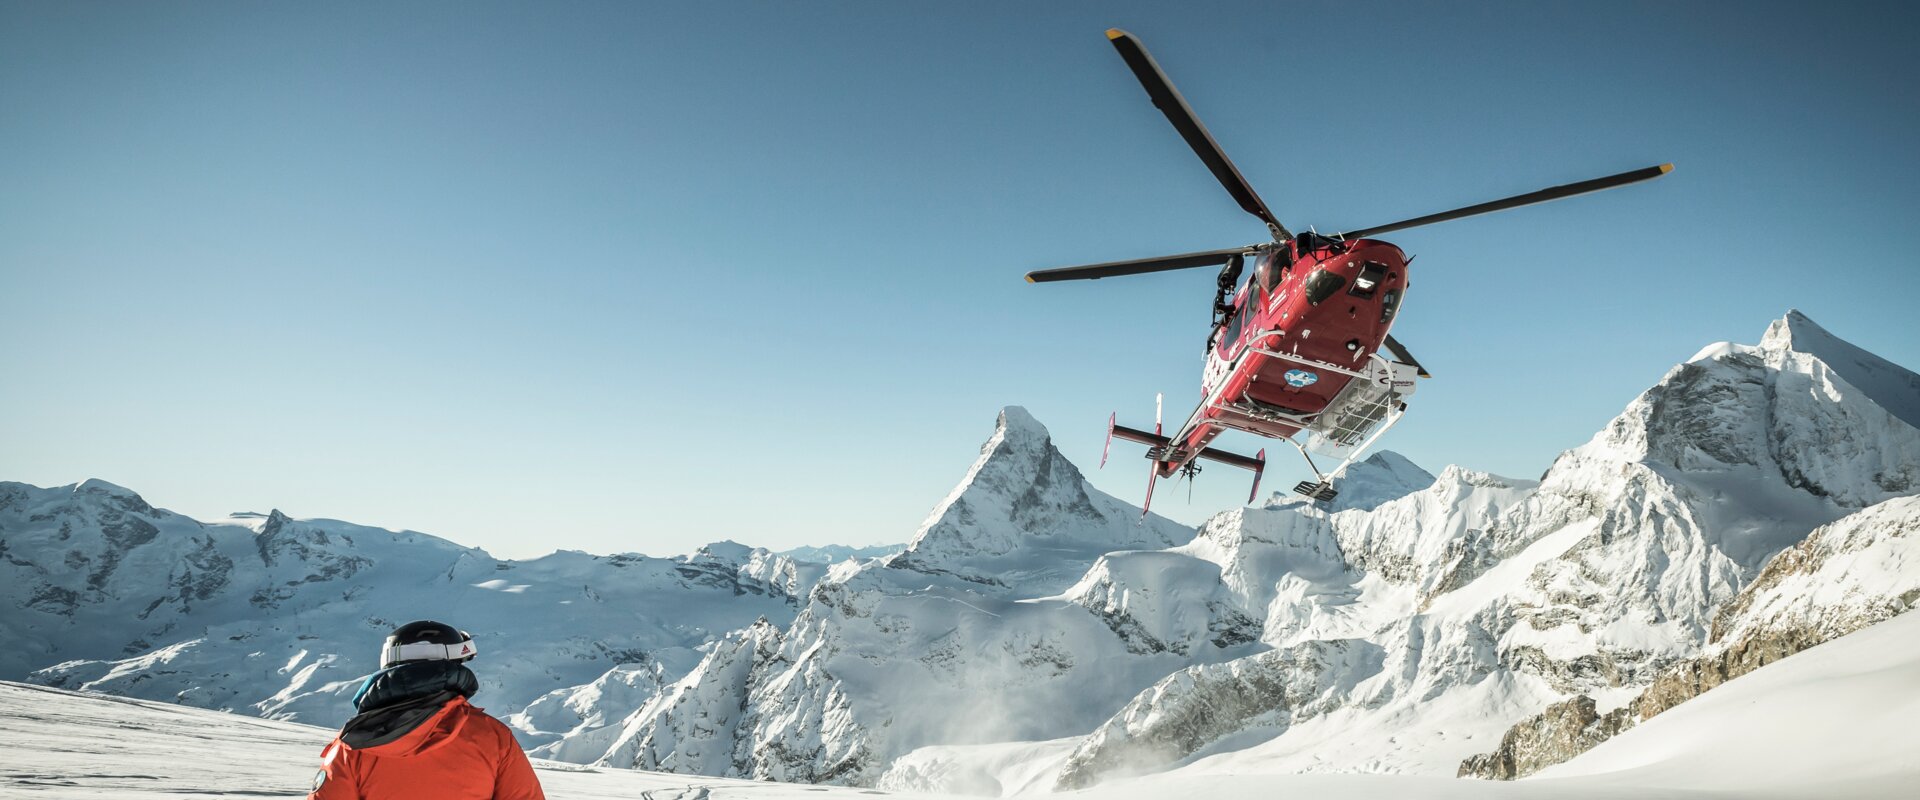 Helikopter fliegt Plateau im Gebirge an | © Michael Portmann